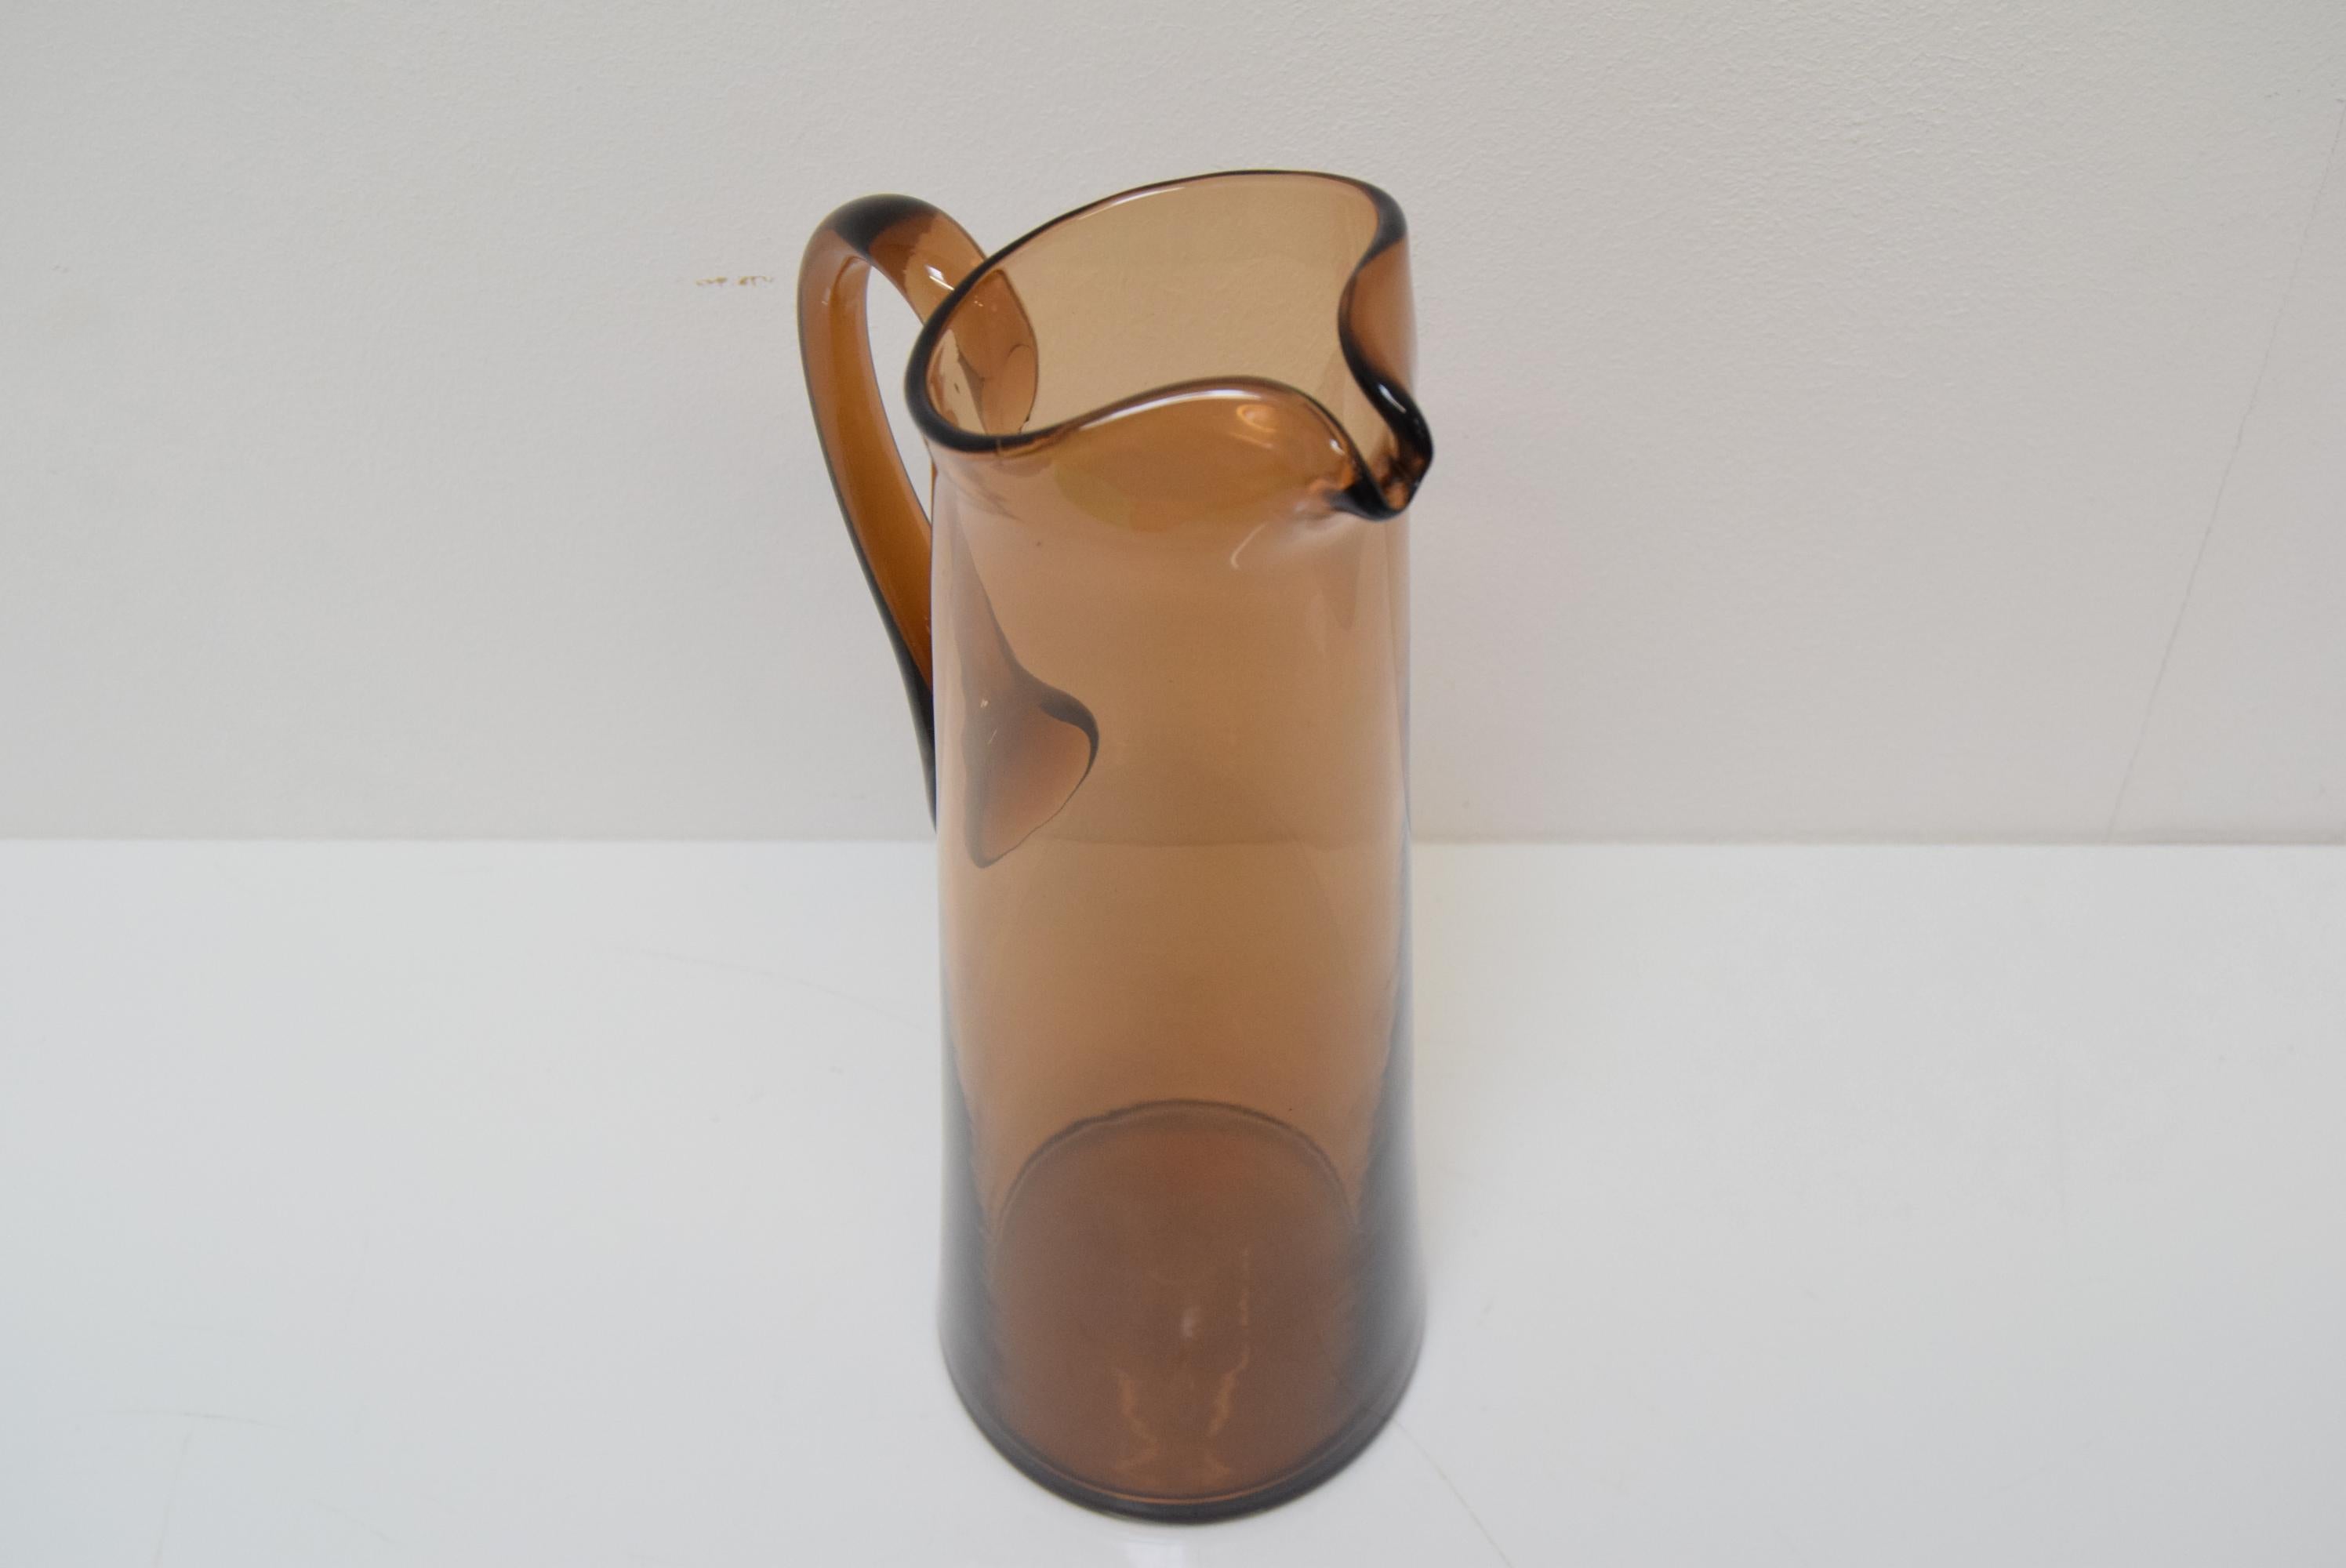 Art Glass Art Czech Glass Pitcher, by Glasswork Novy Bor, 1950s For Sale